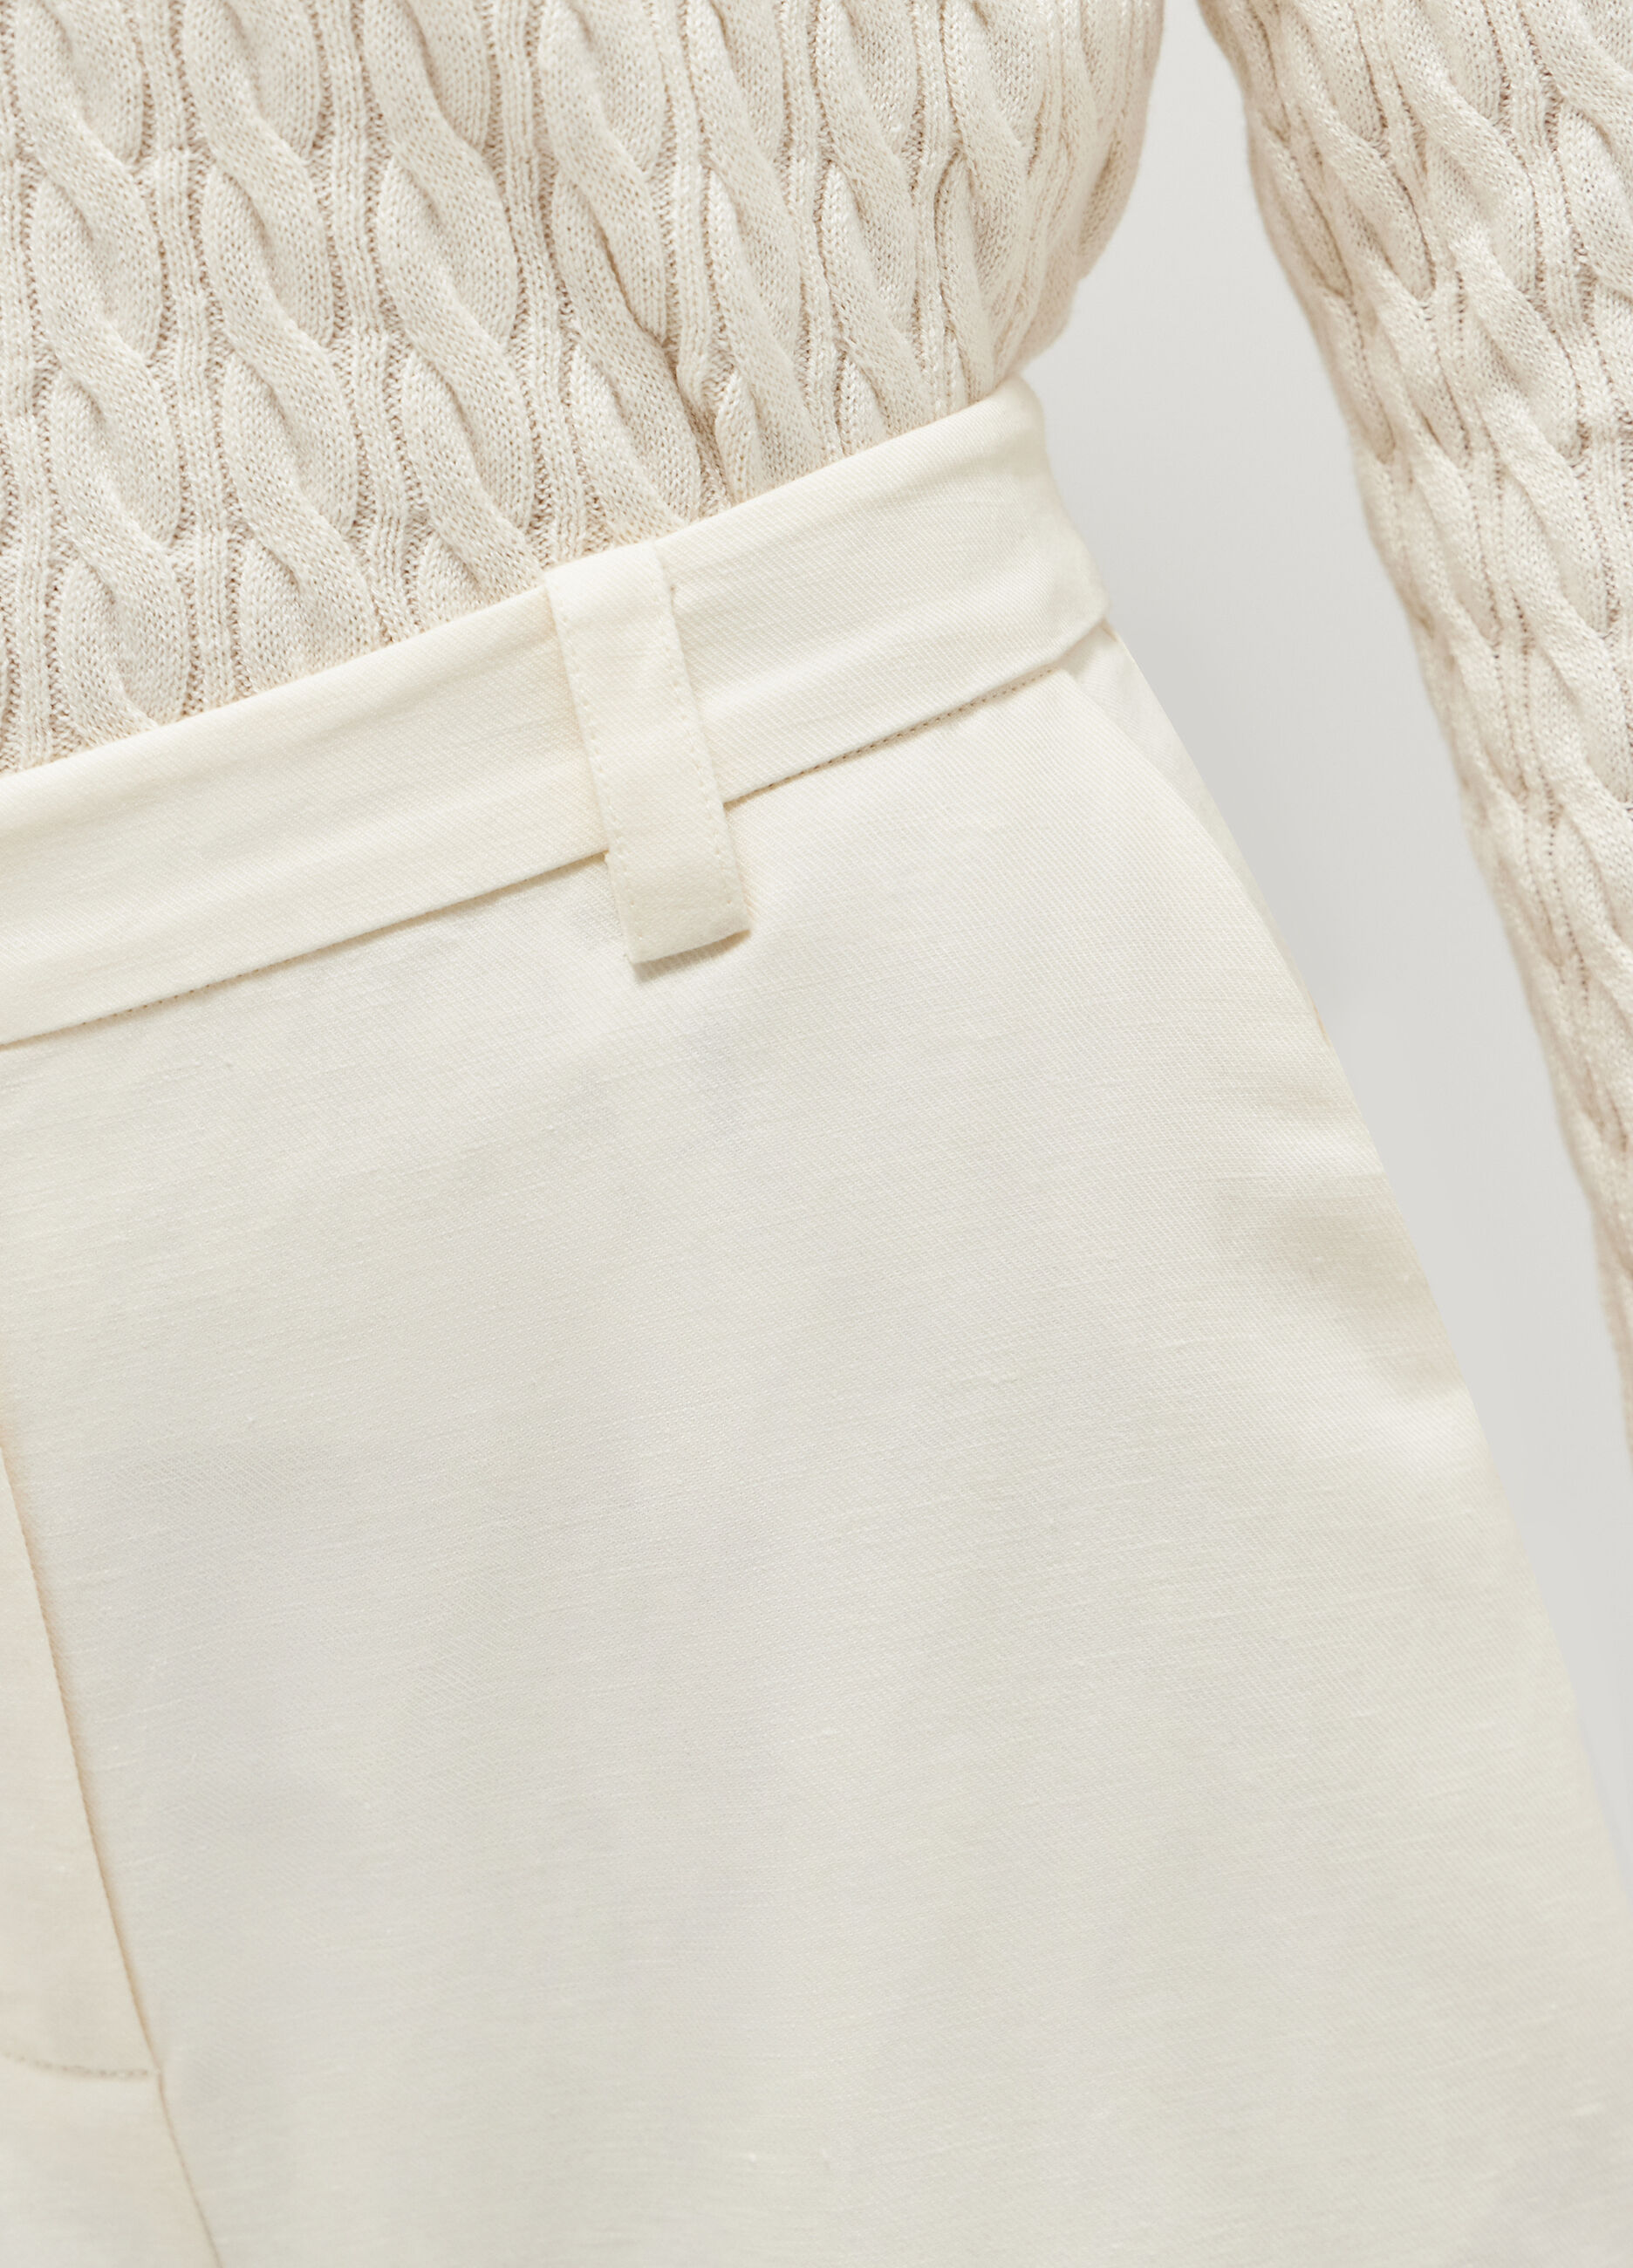 Linen, cotton and viscose palazzo trousers